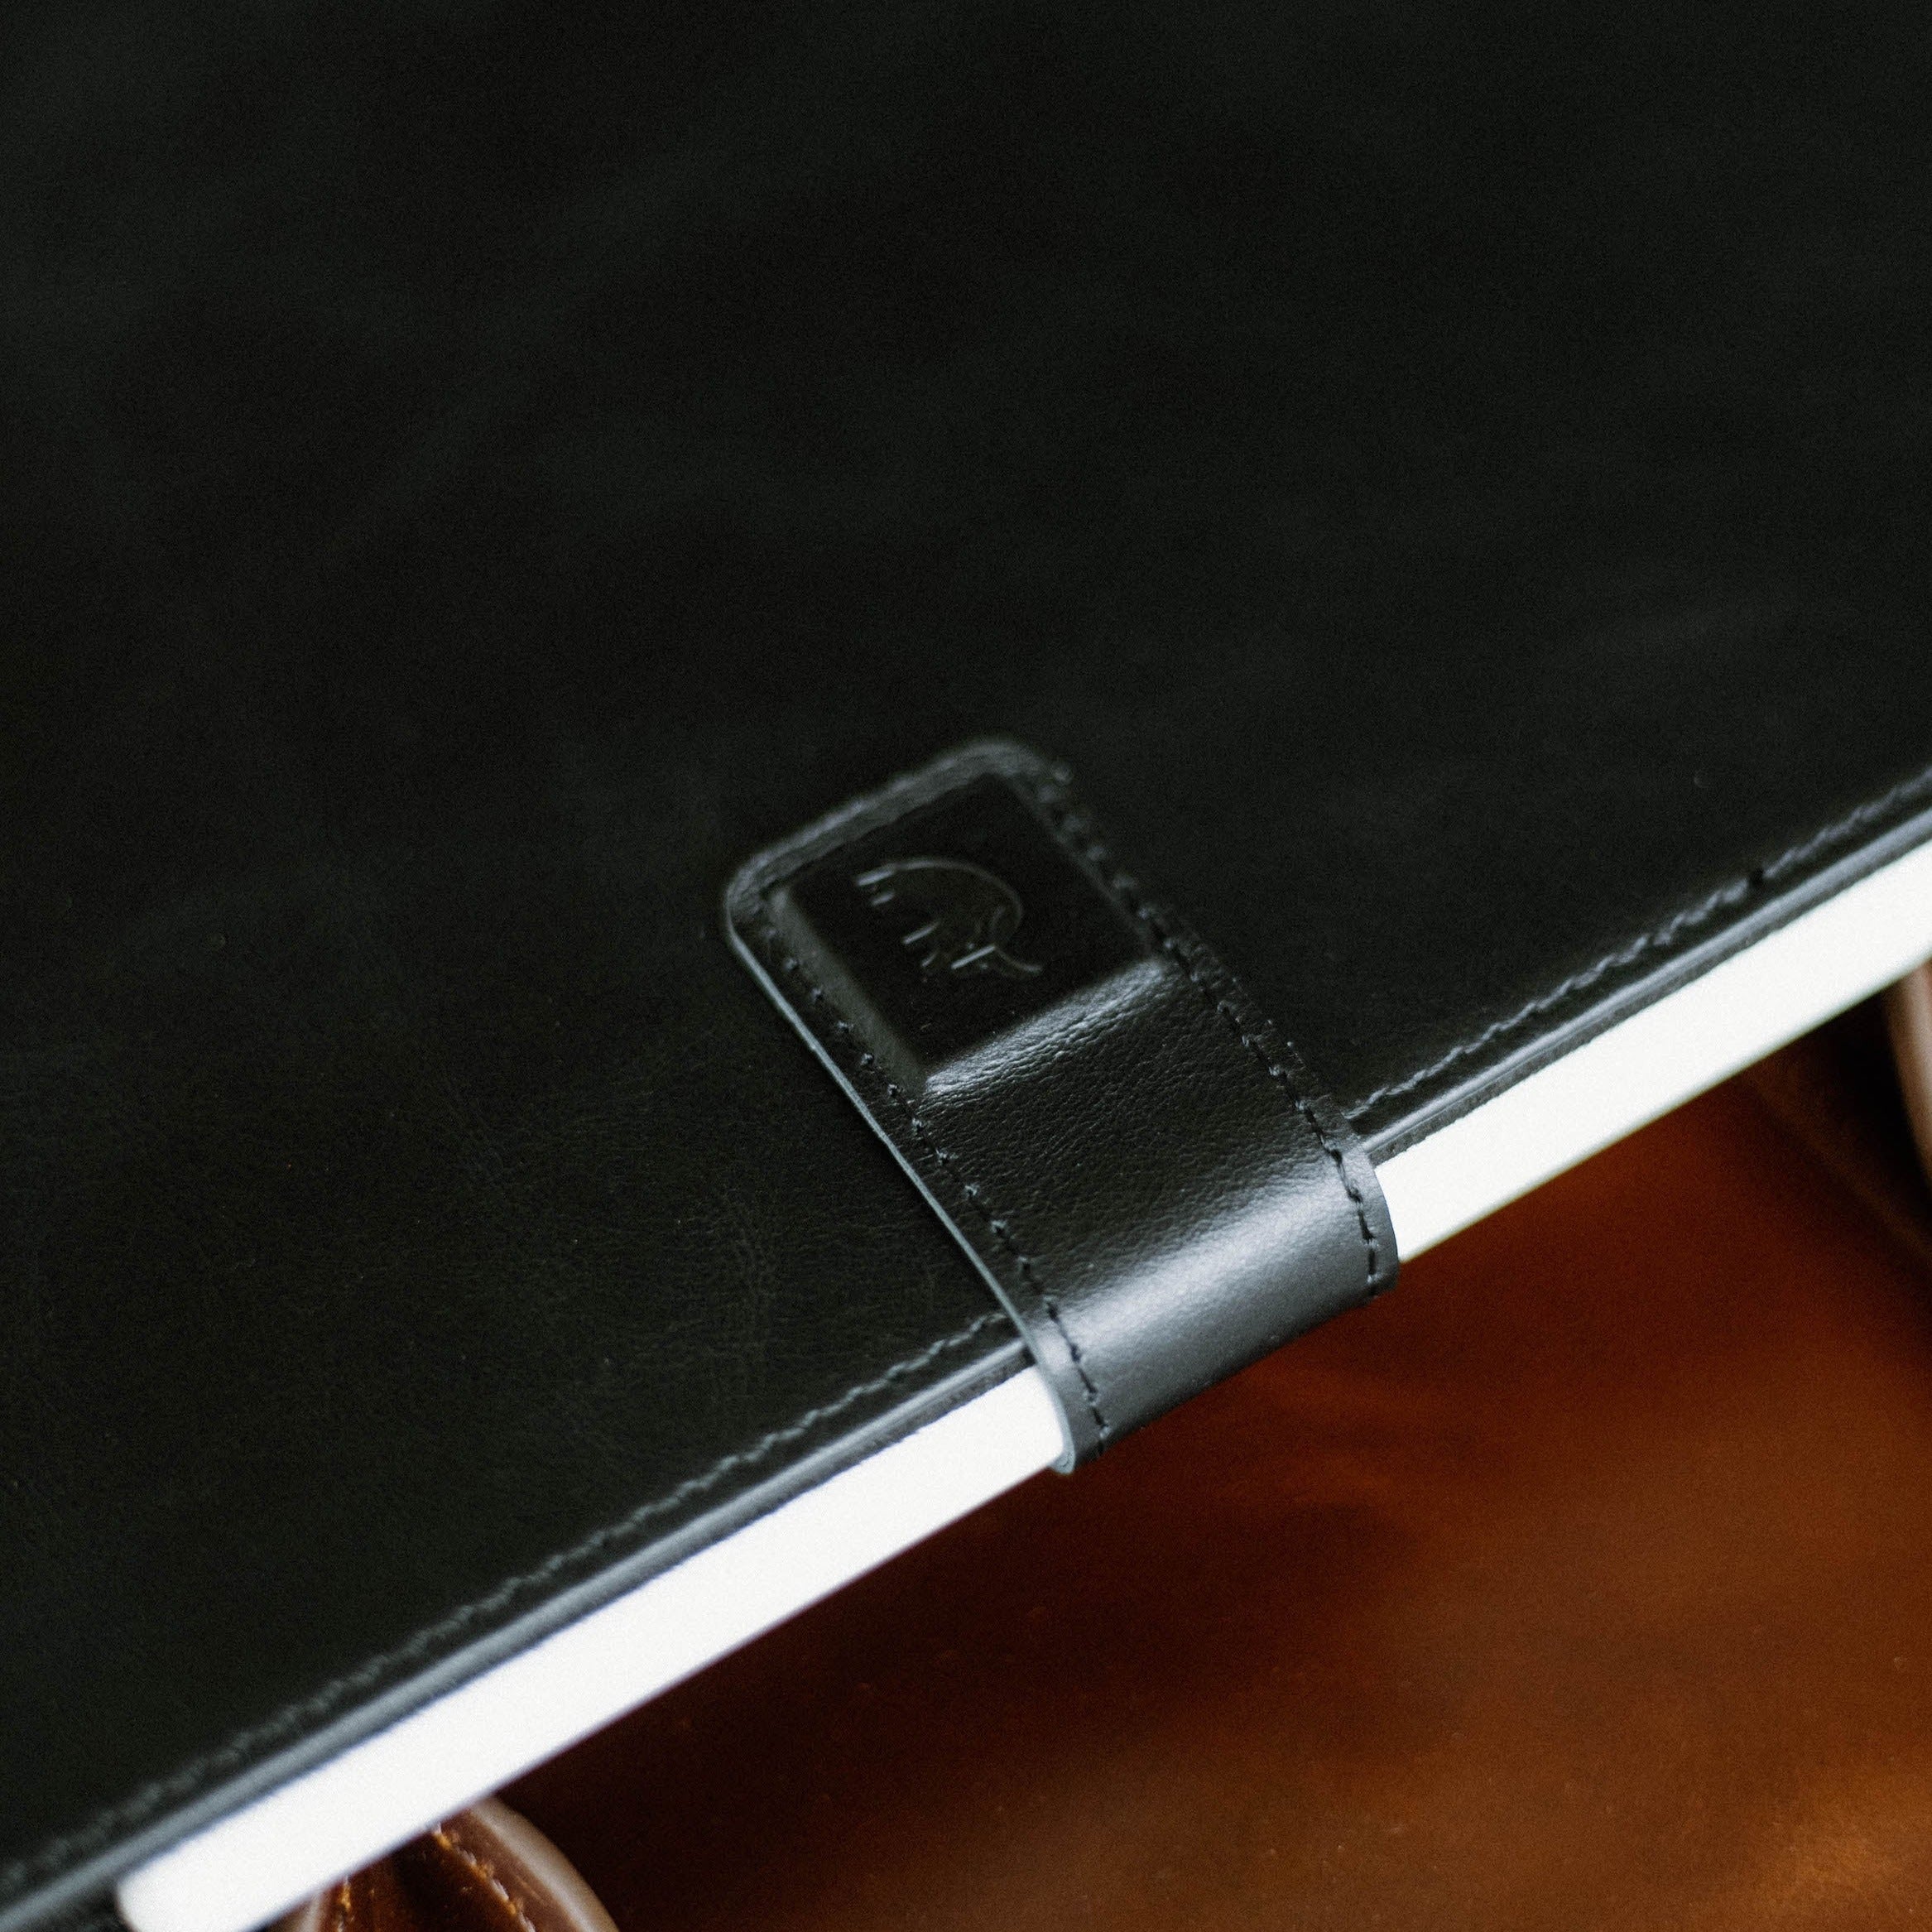 Leather iPad Case - BLACK EDITION